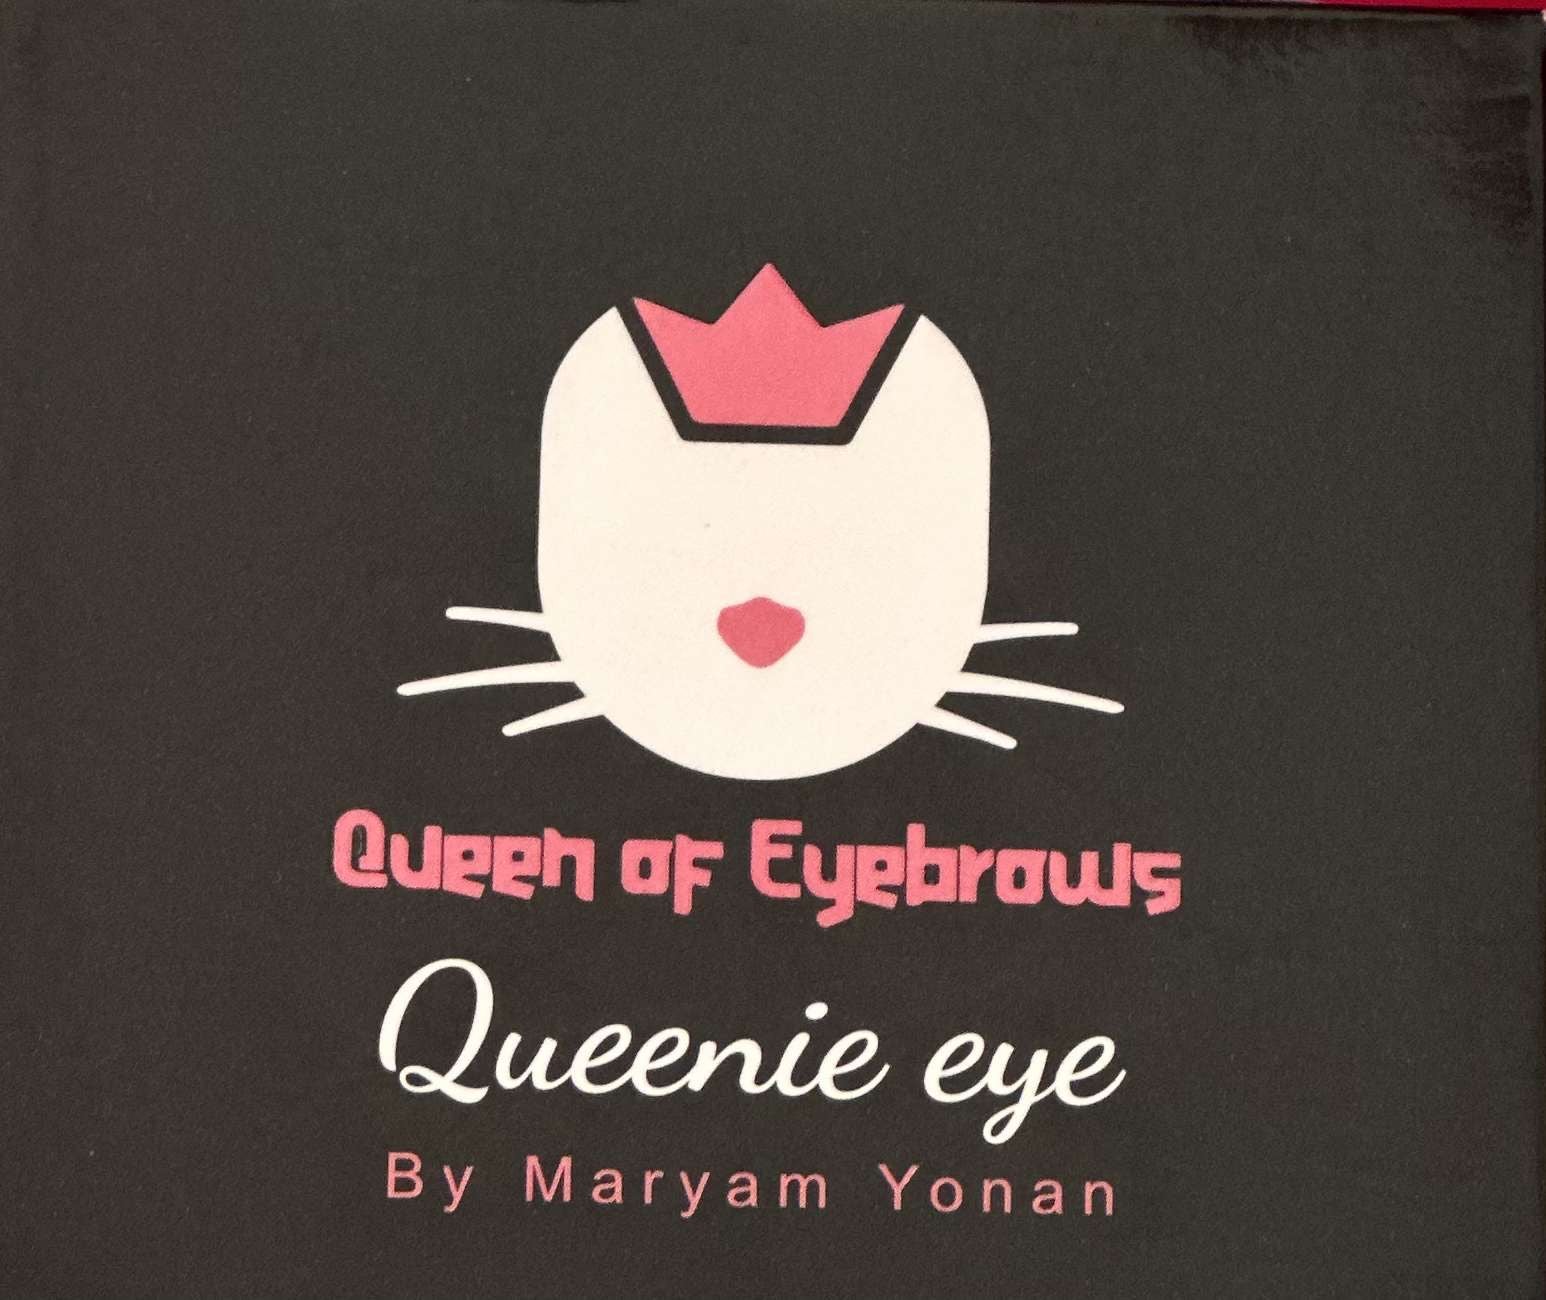 Queen of Eyebrows Eye Contacts